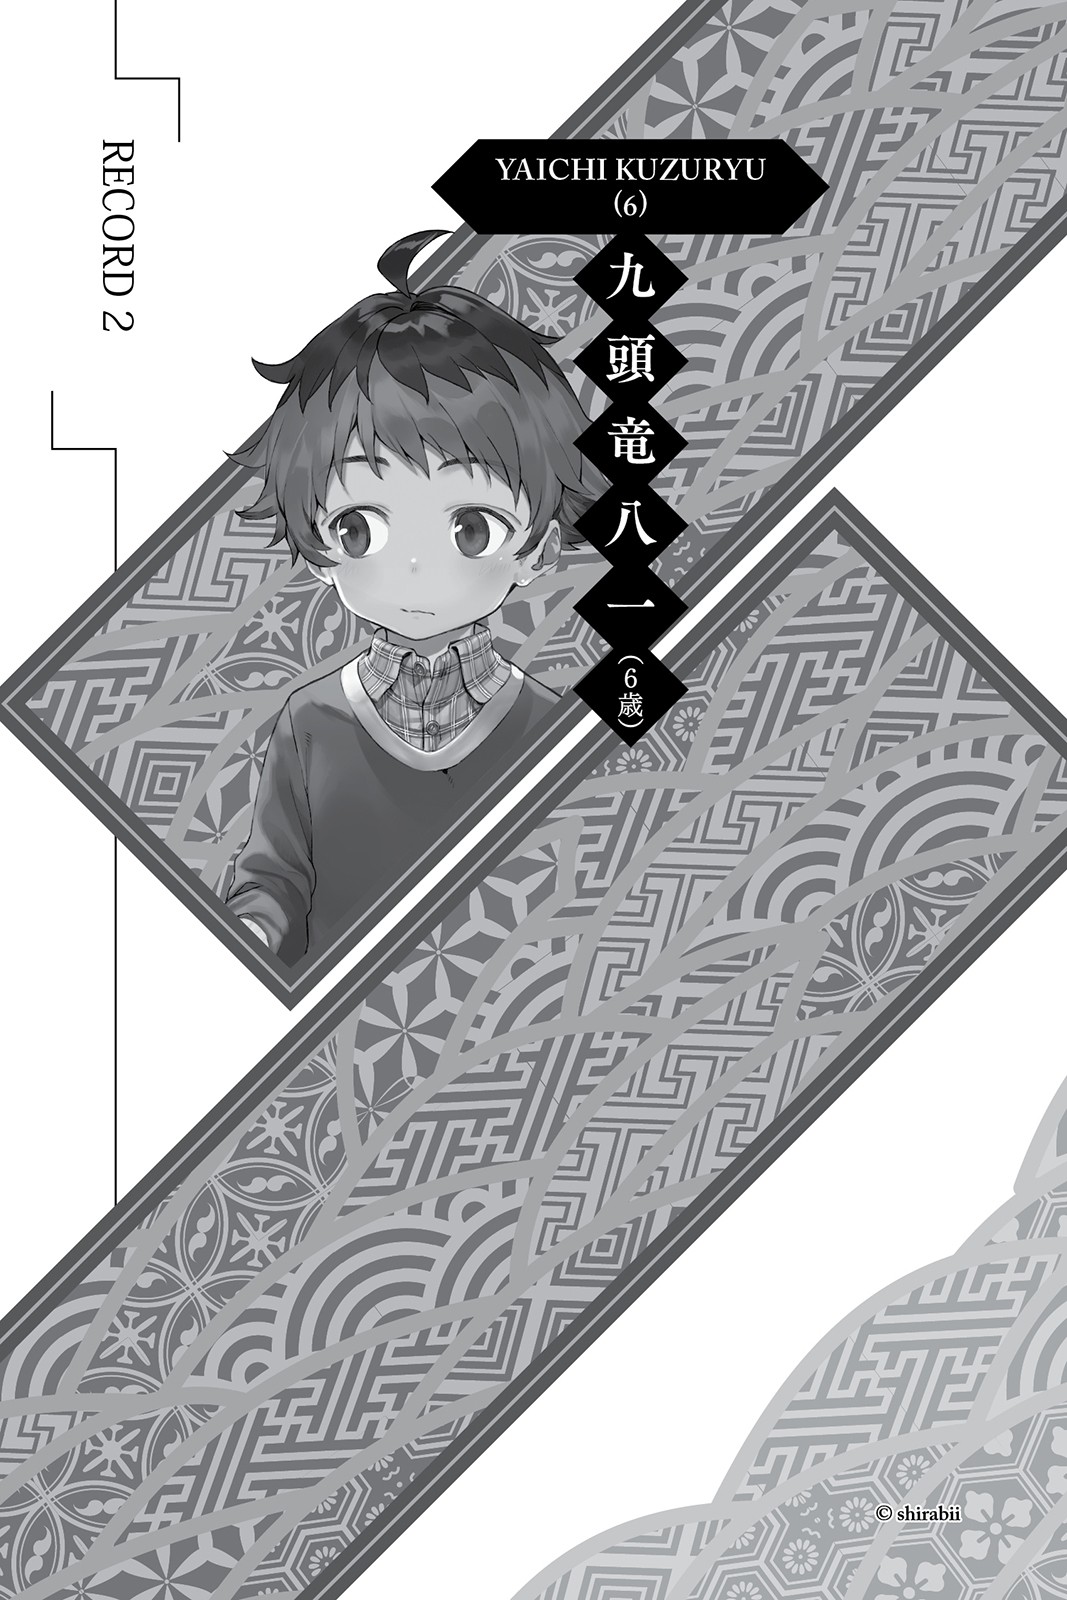 [Ruidrive] - Ilustrasi Light Novel Ryuuou no Oshigoto! - Volume 11 - 09